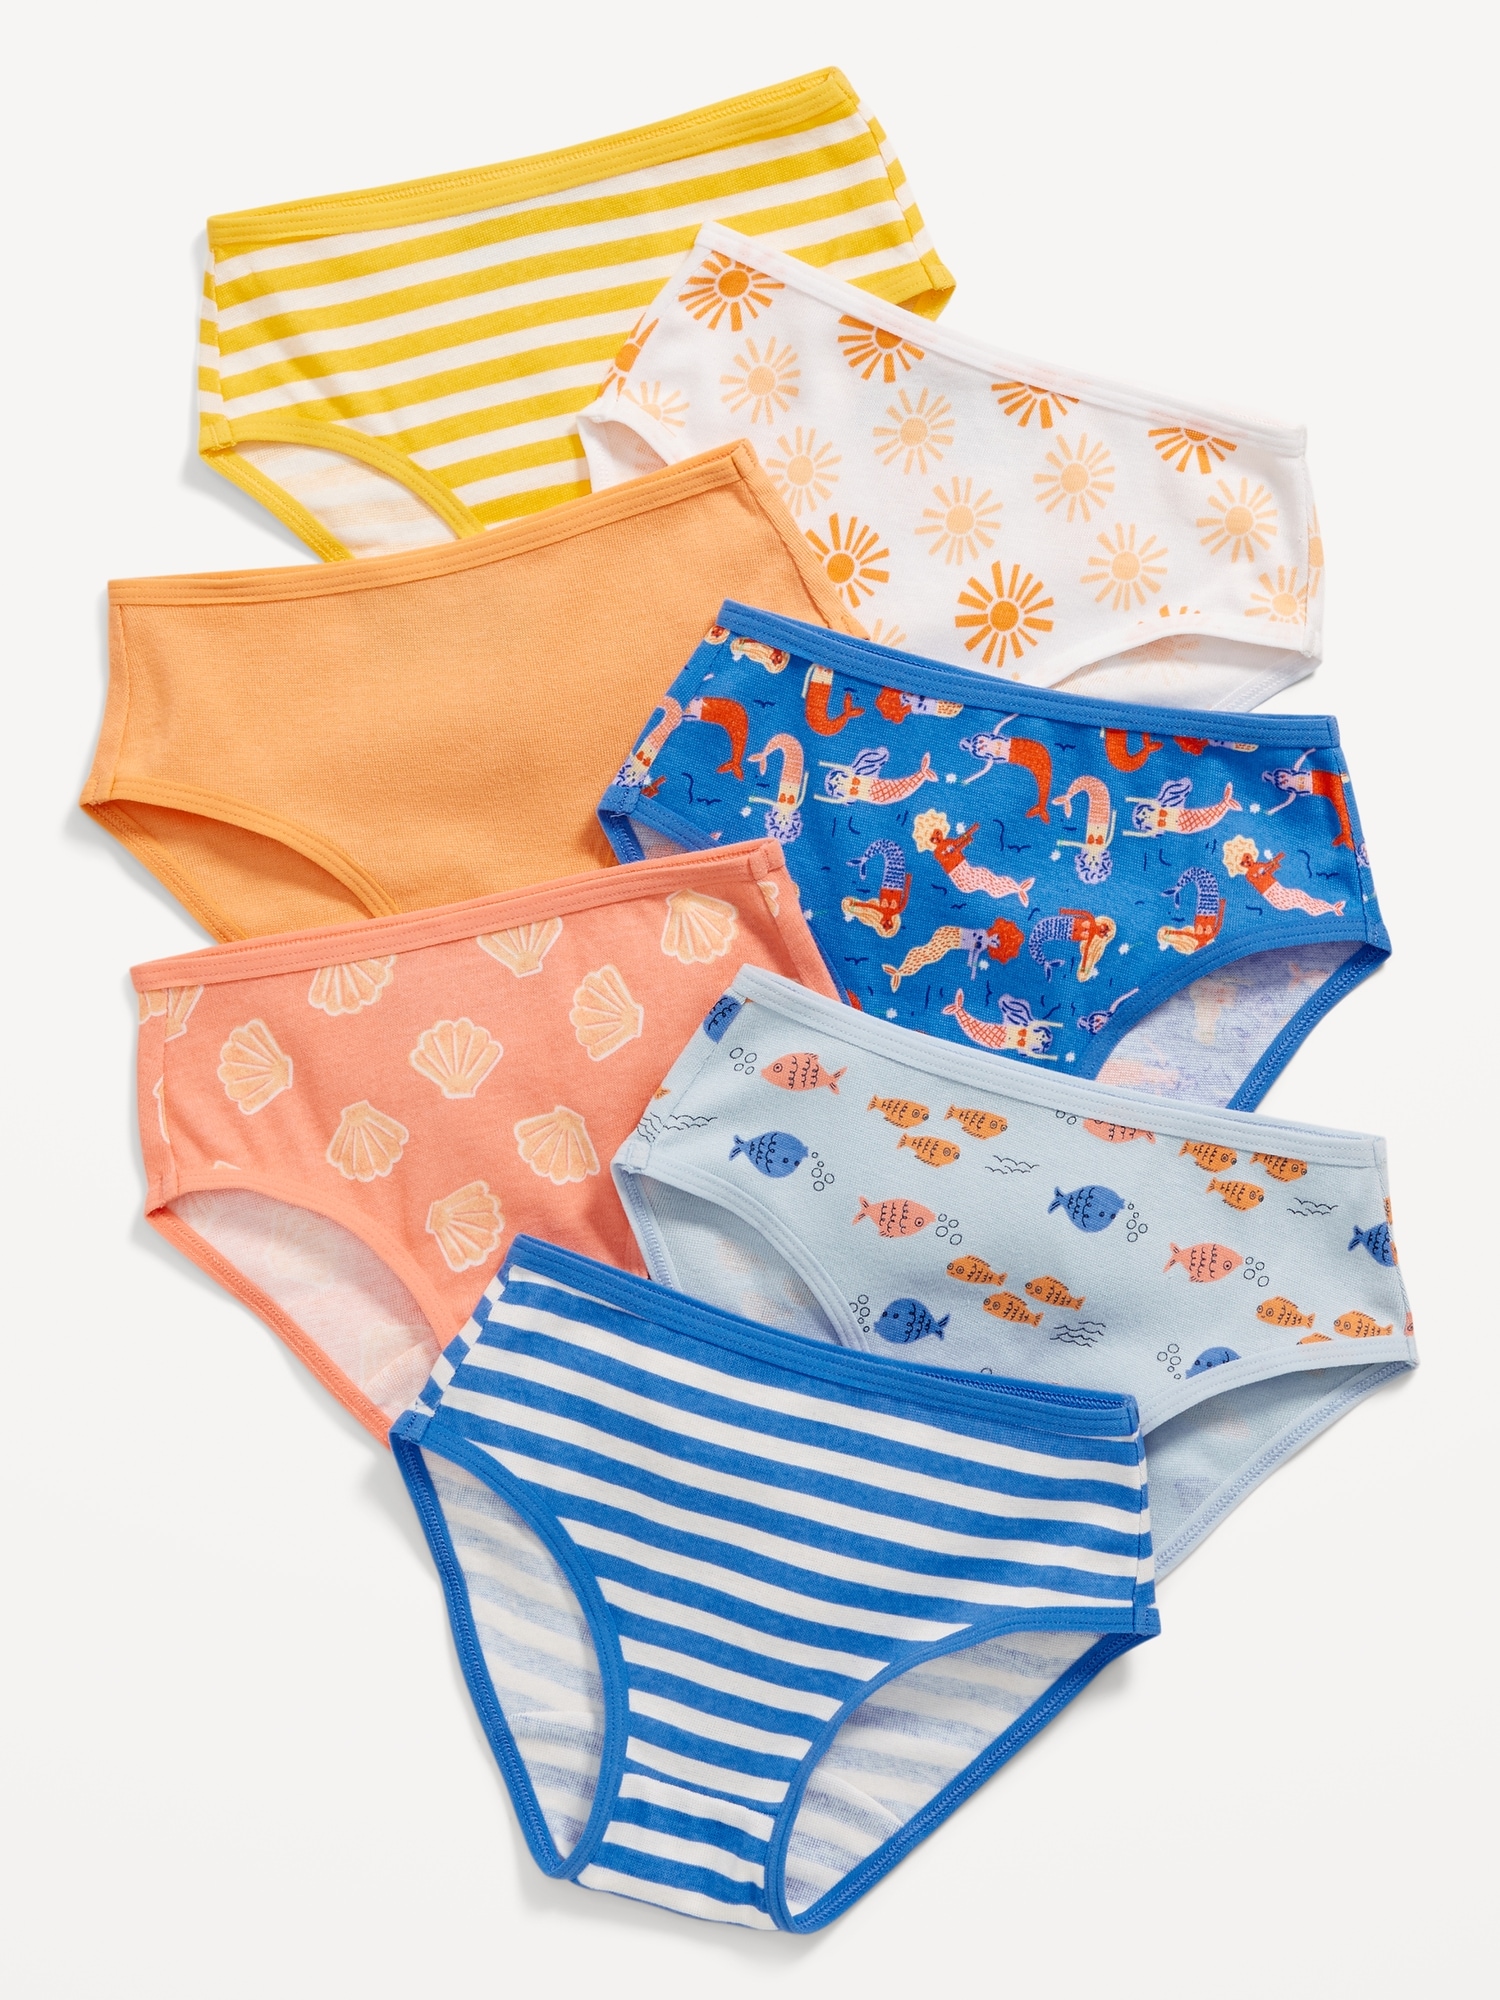 Wonder Nation Girls Bikini Underwear, Assorted Color Panties, 10